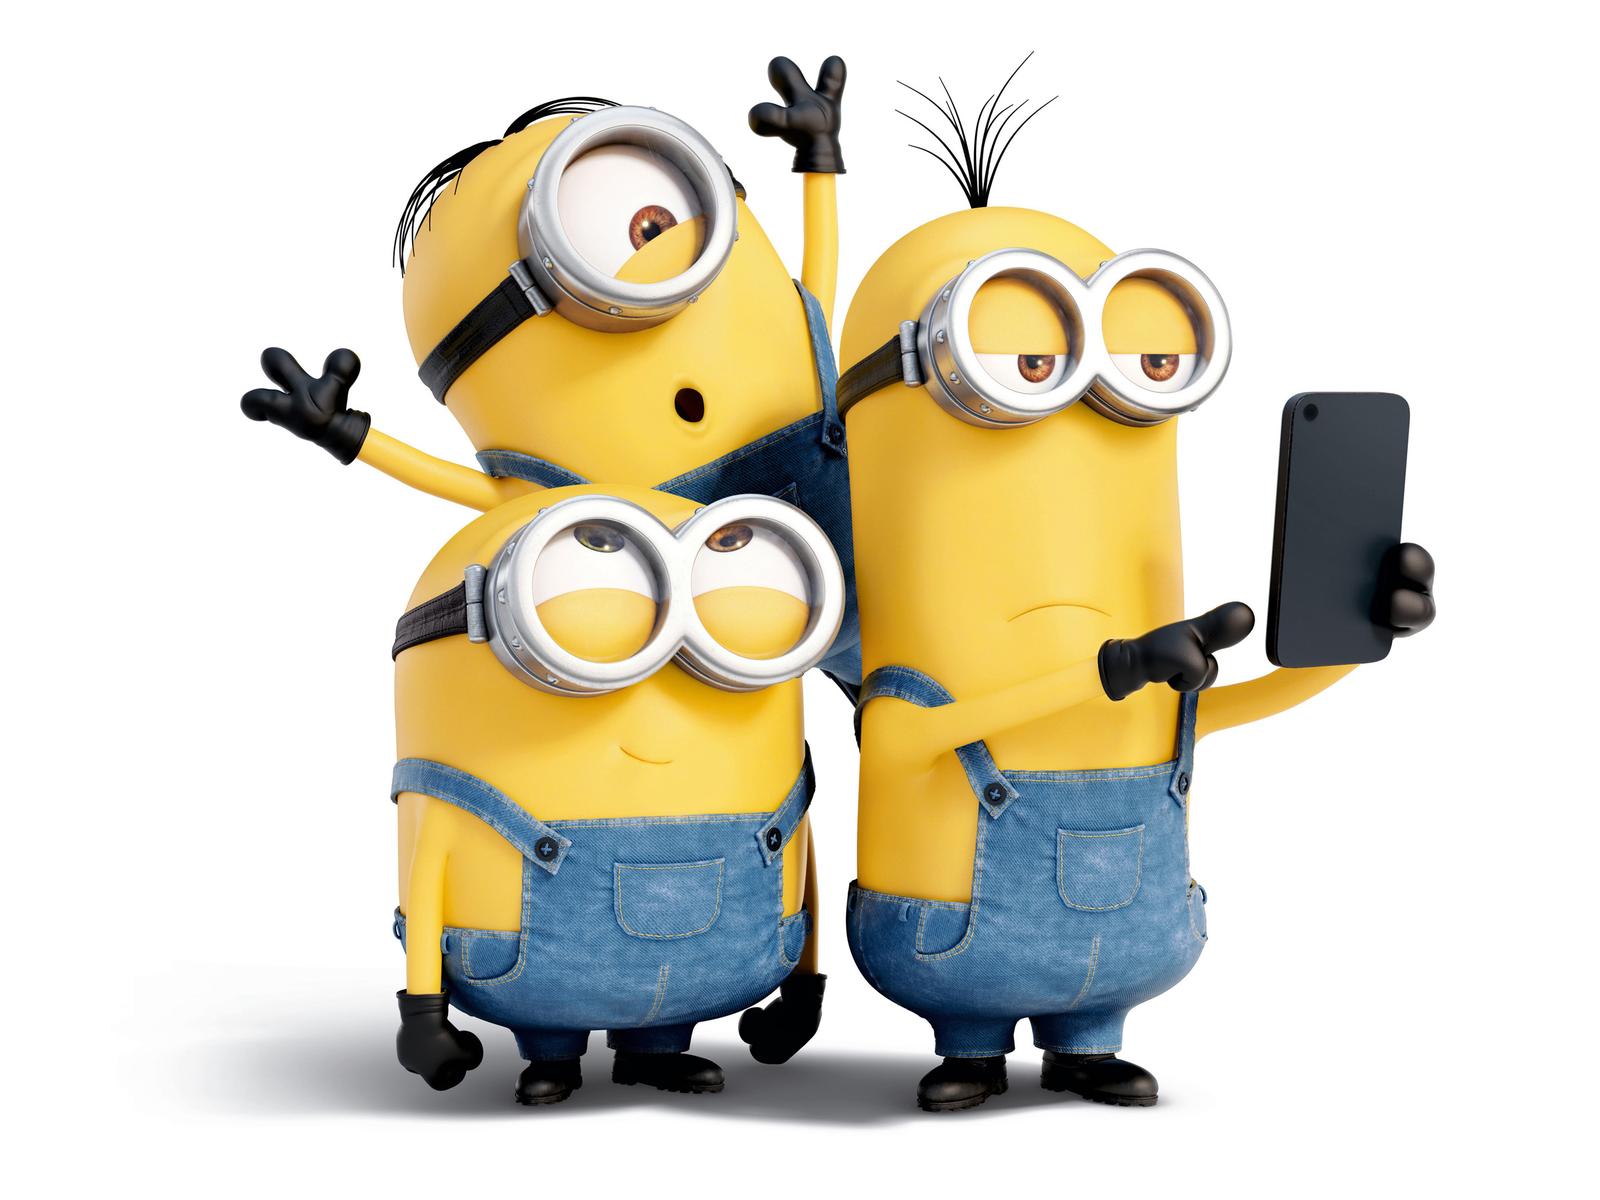 Three crazy minions make a selfie - Funny cartoon characters